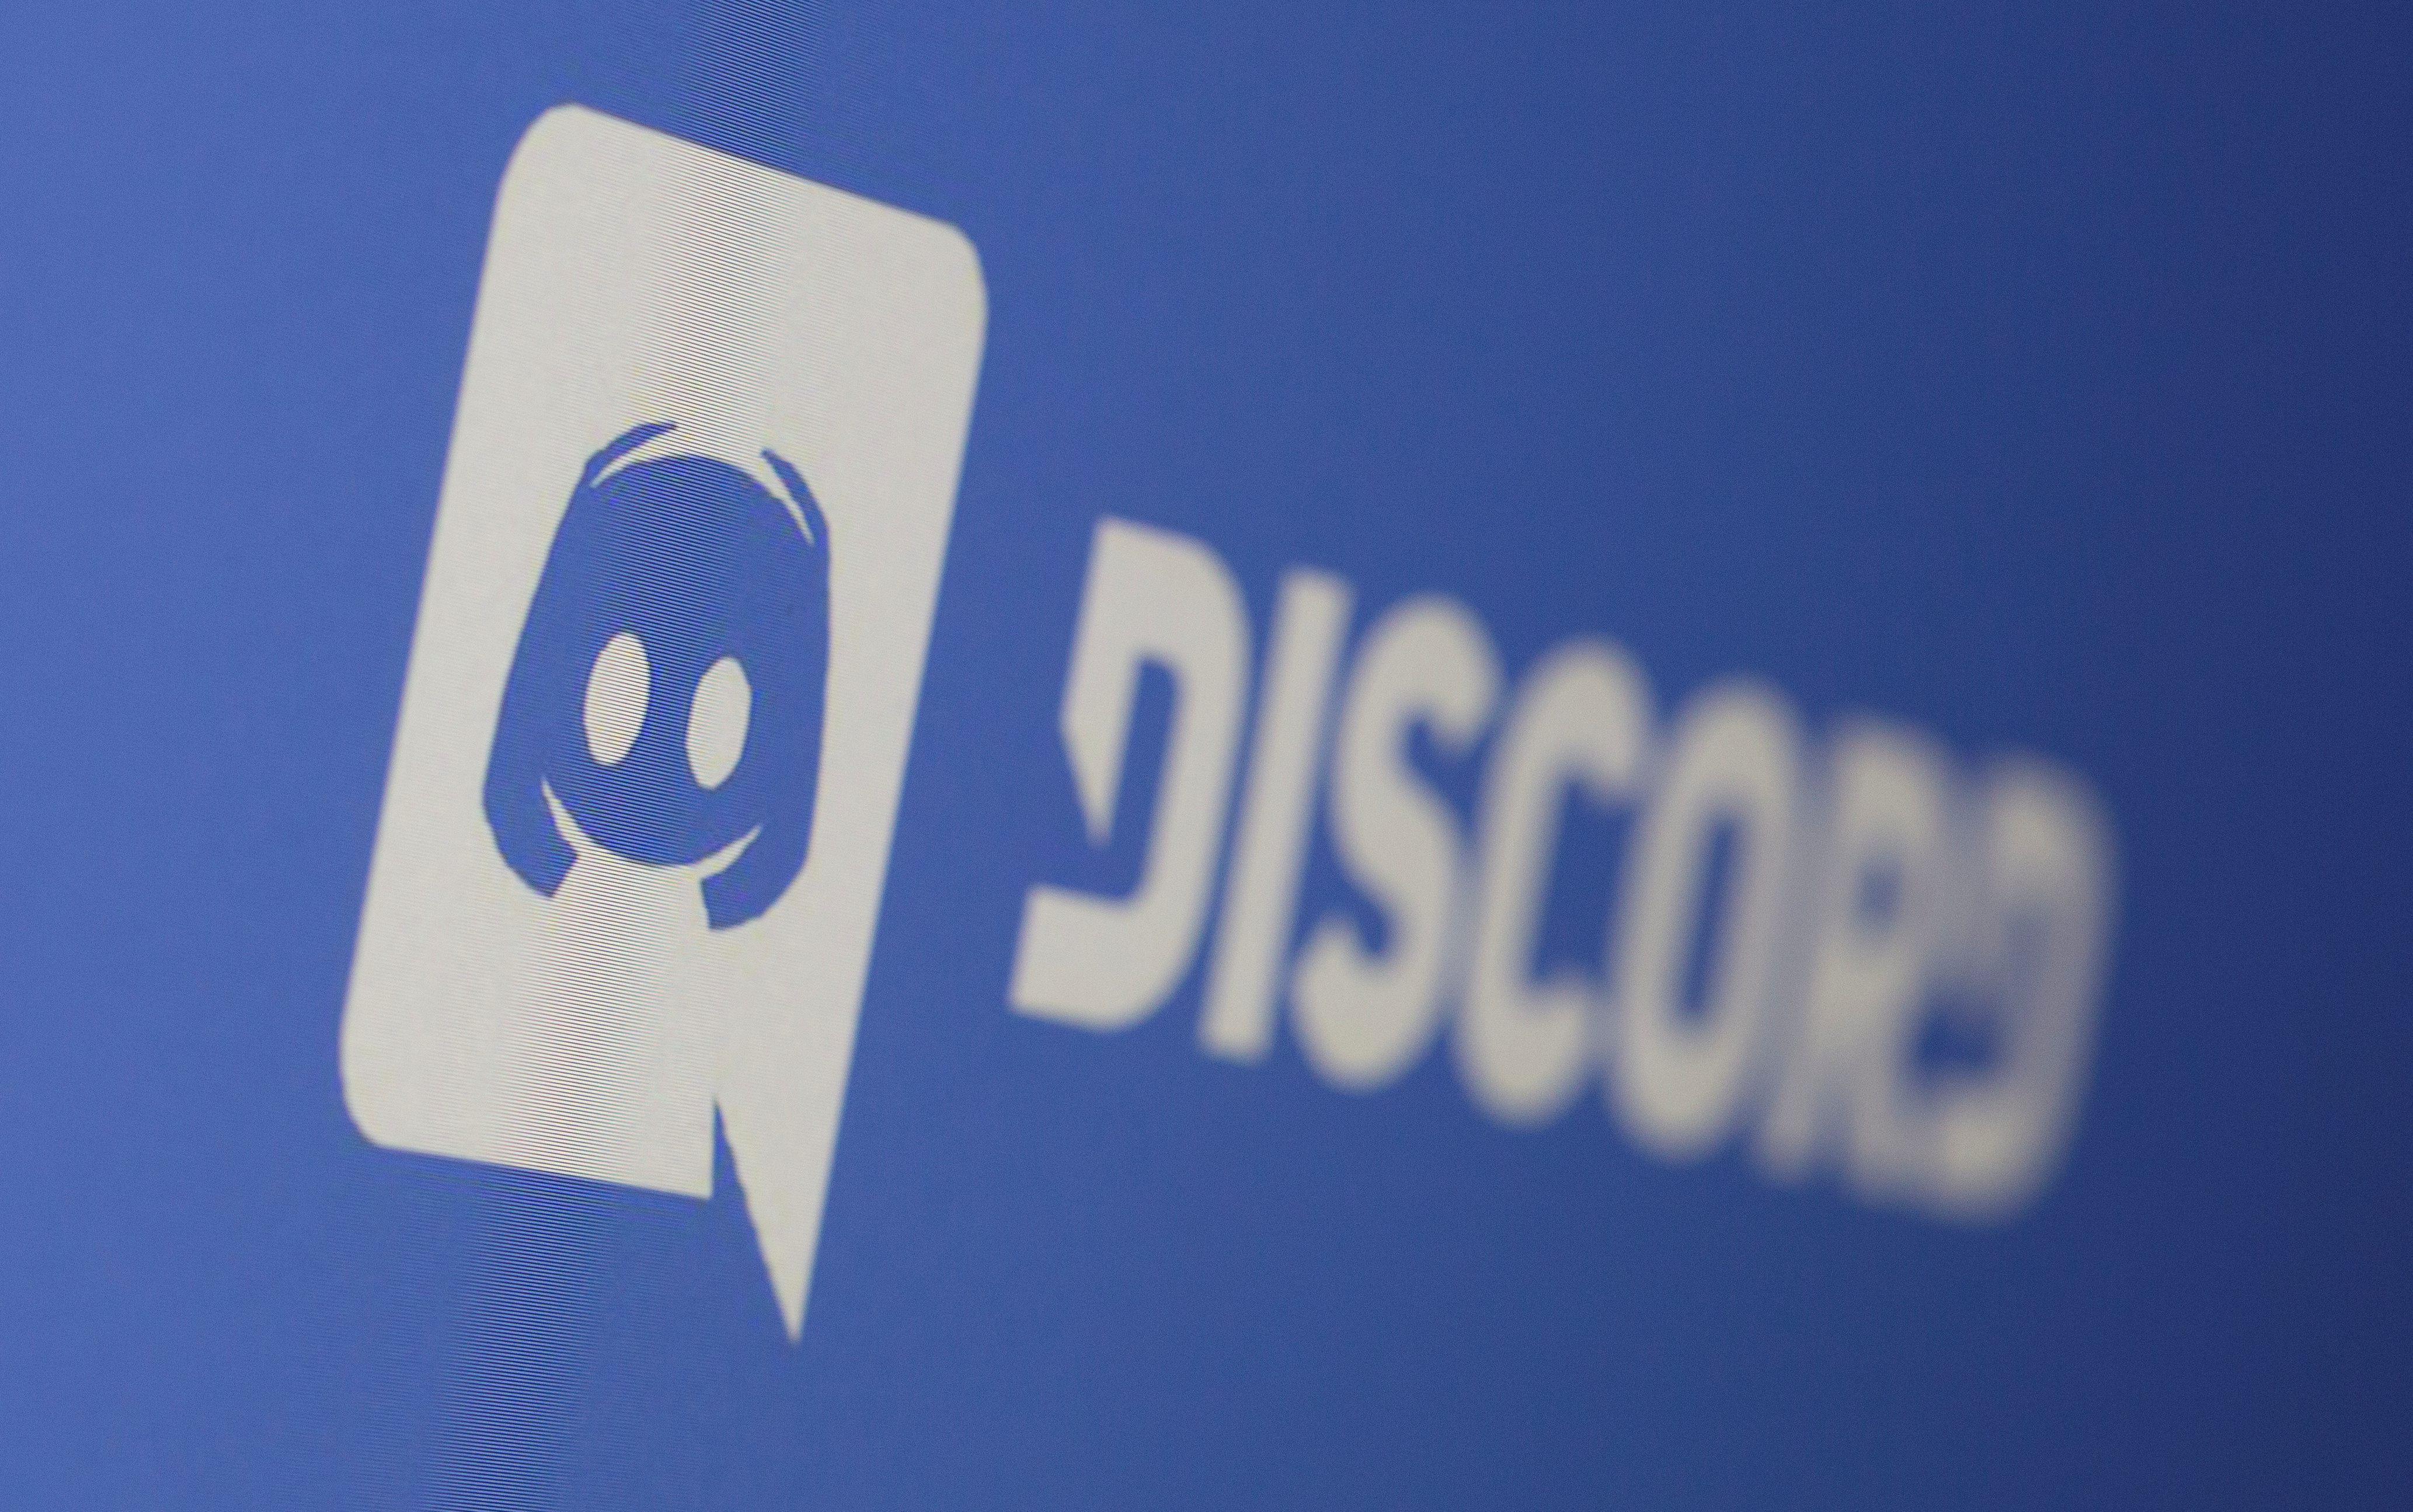 Discord revolutionizes online conversations with… forums